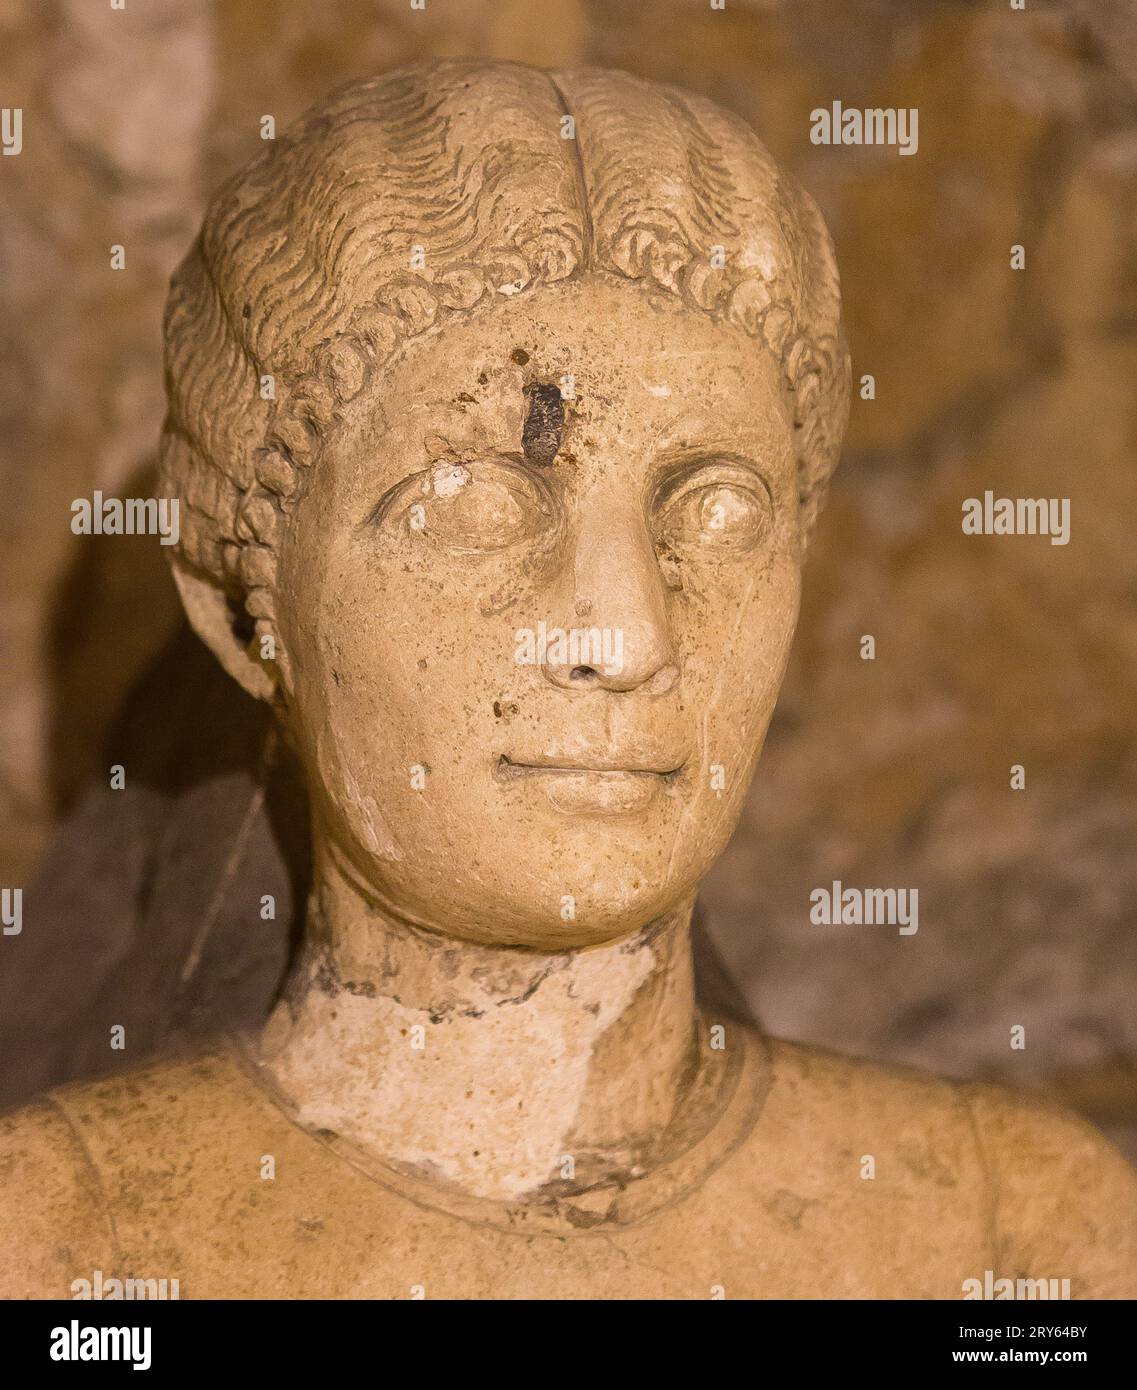 Kom el Shogafa necropolis, main tomb, antechamber : Statue of a woman, mixing egyptian and roman characteristics. Stock Photo